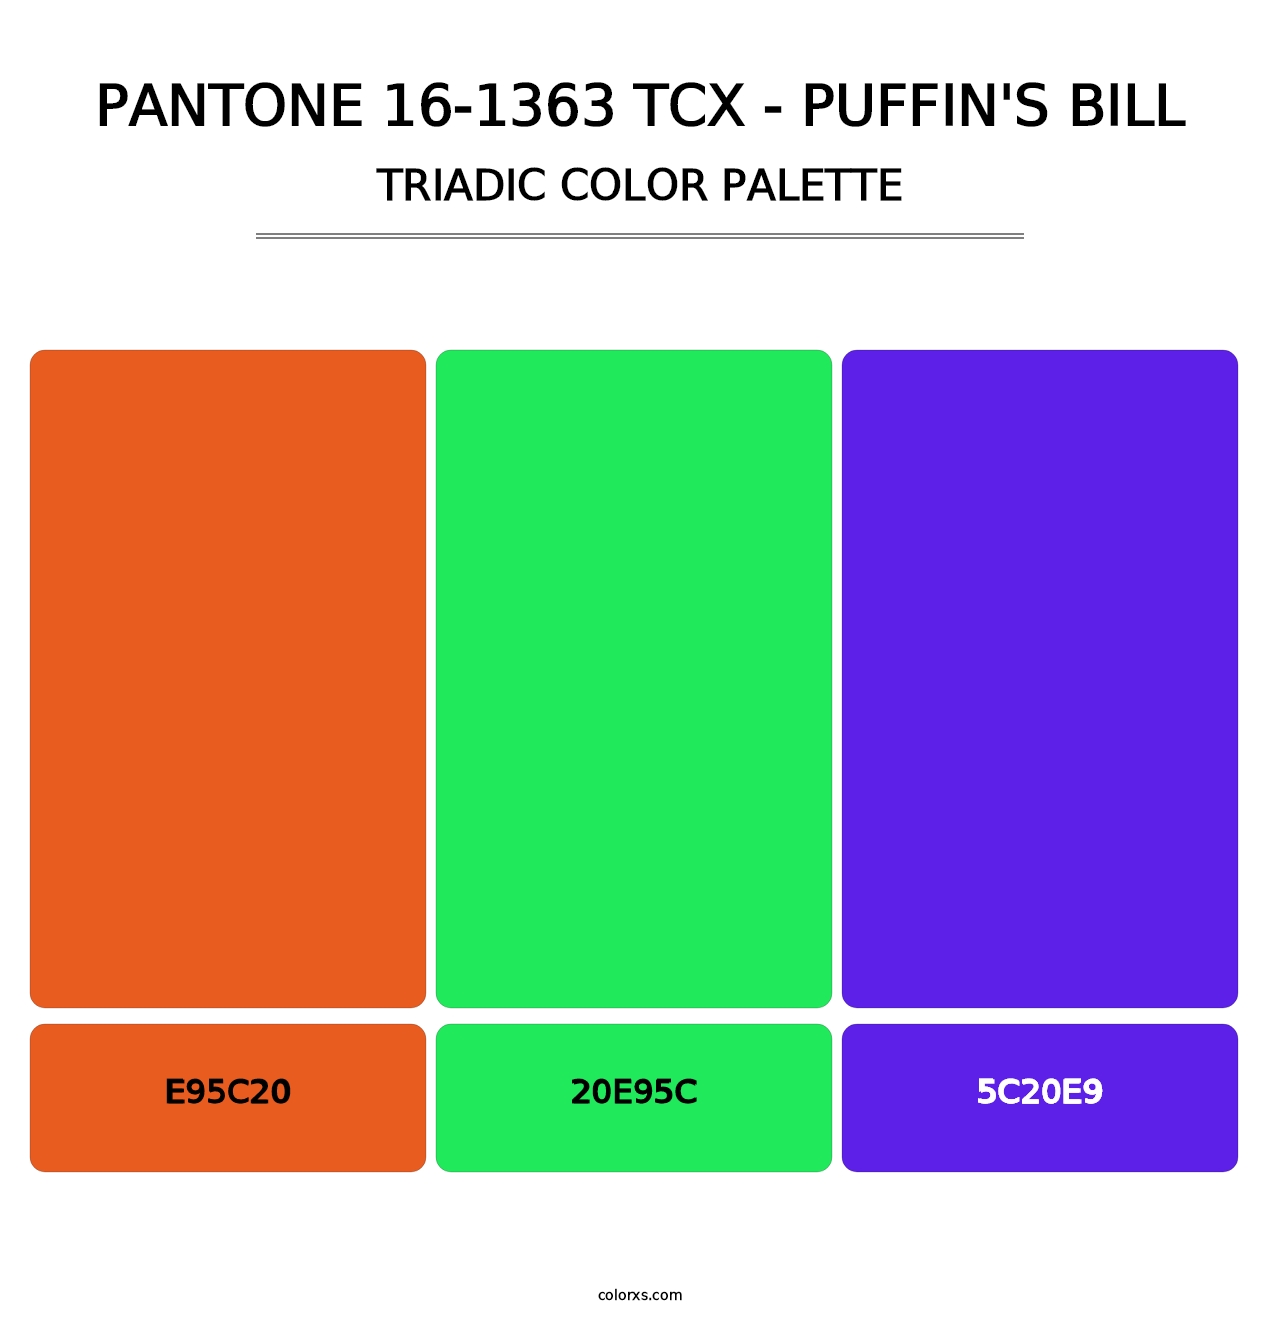 PANTONE 16-1363 TCX - Puffin's Bill - Triadic Color Palette